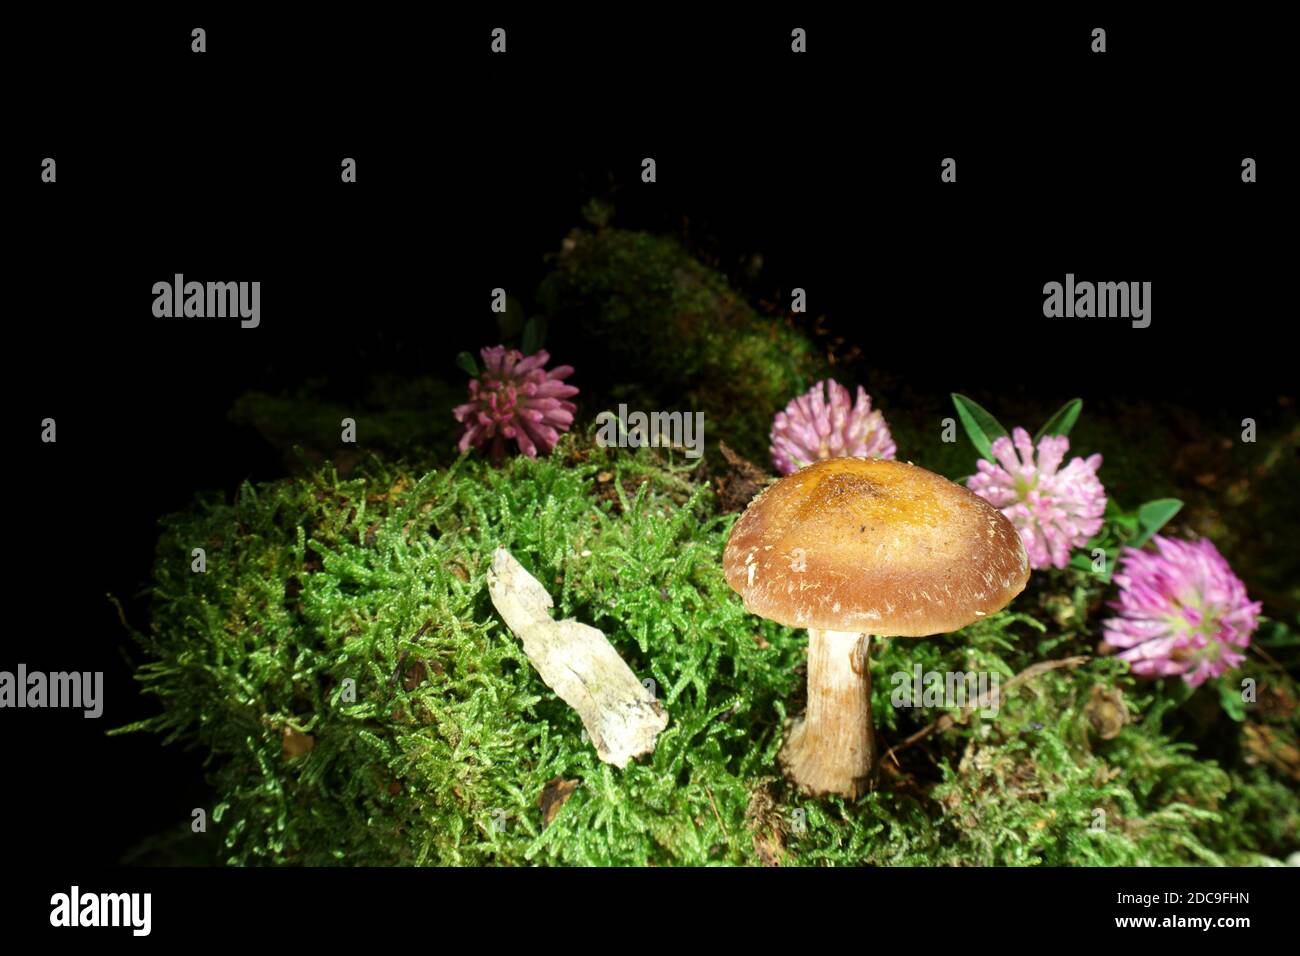 Mushroom on black background in moss with clover flowers. English name of this mushroom is Dark honey fungus, in latin Armillaria Ostoyae Stock Photo